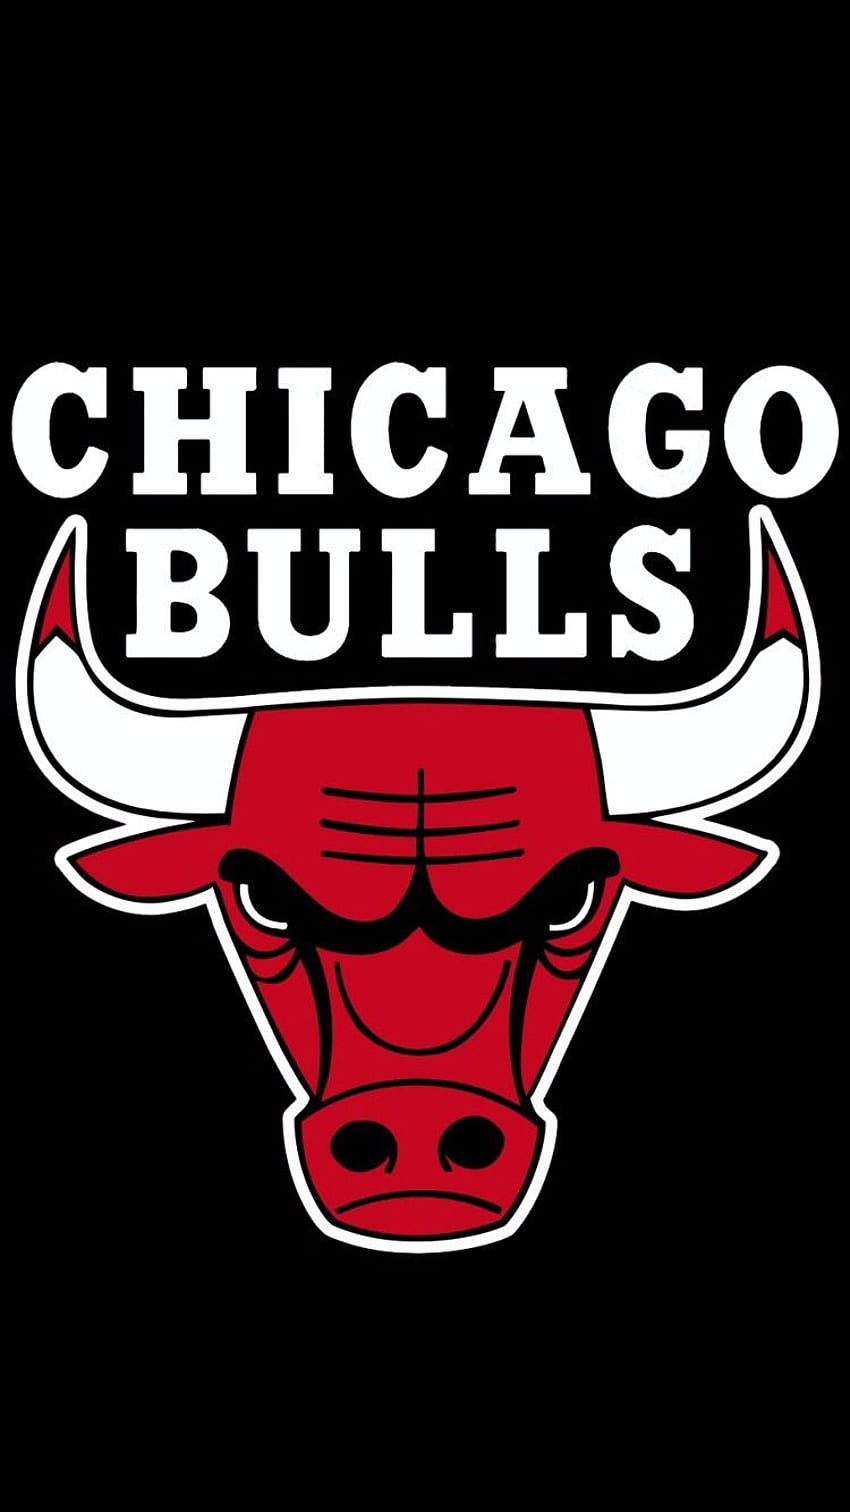 Logo do Chicago Bulls. Basquetebol. Chicago bulls basquete Papel de parede de celular HD